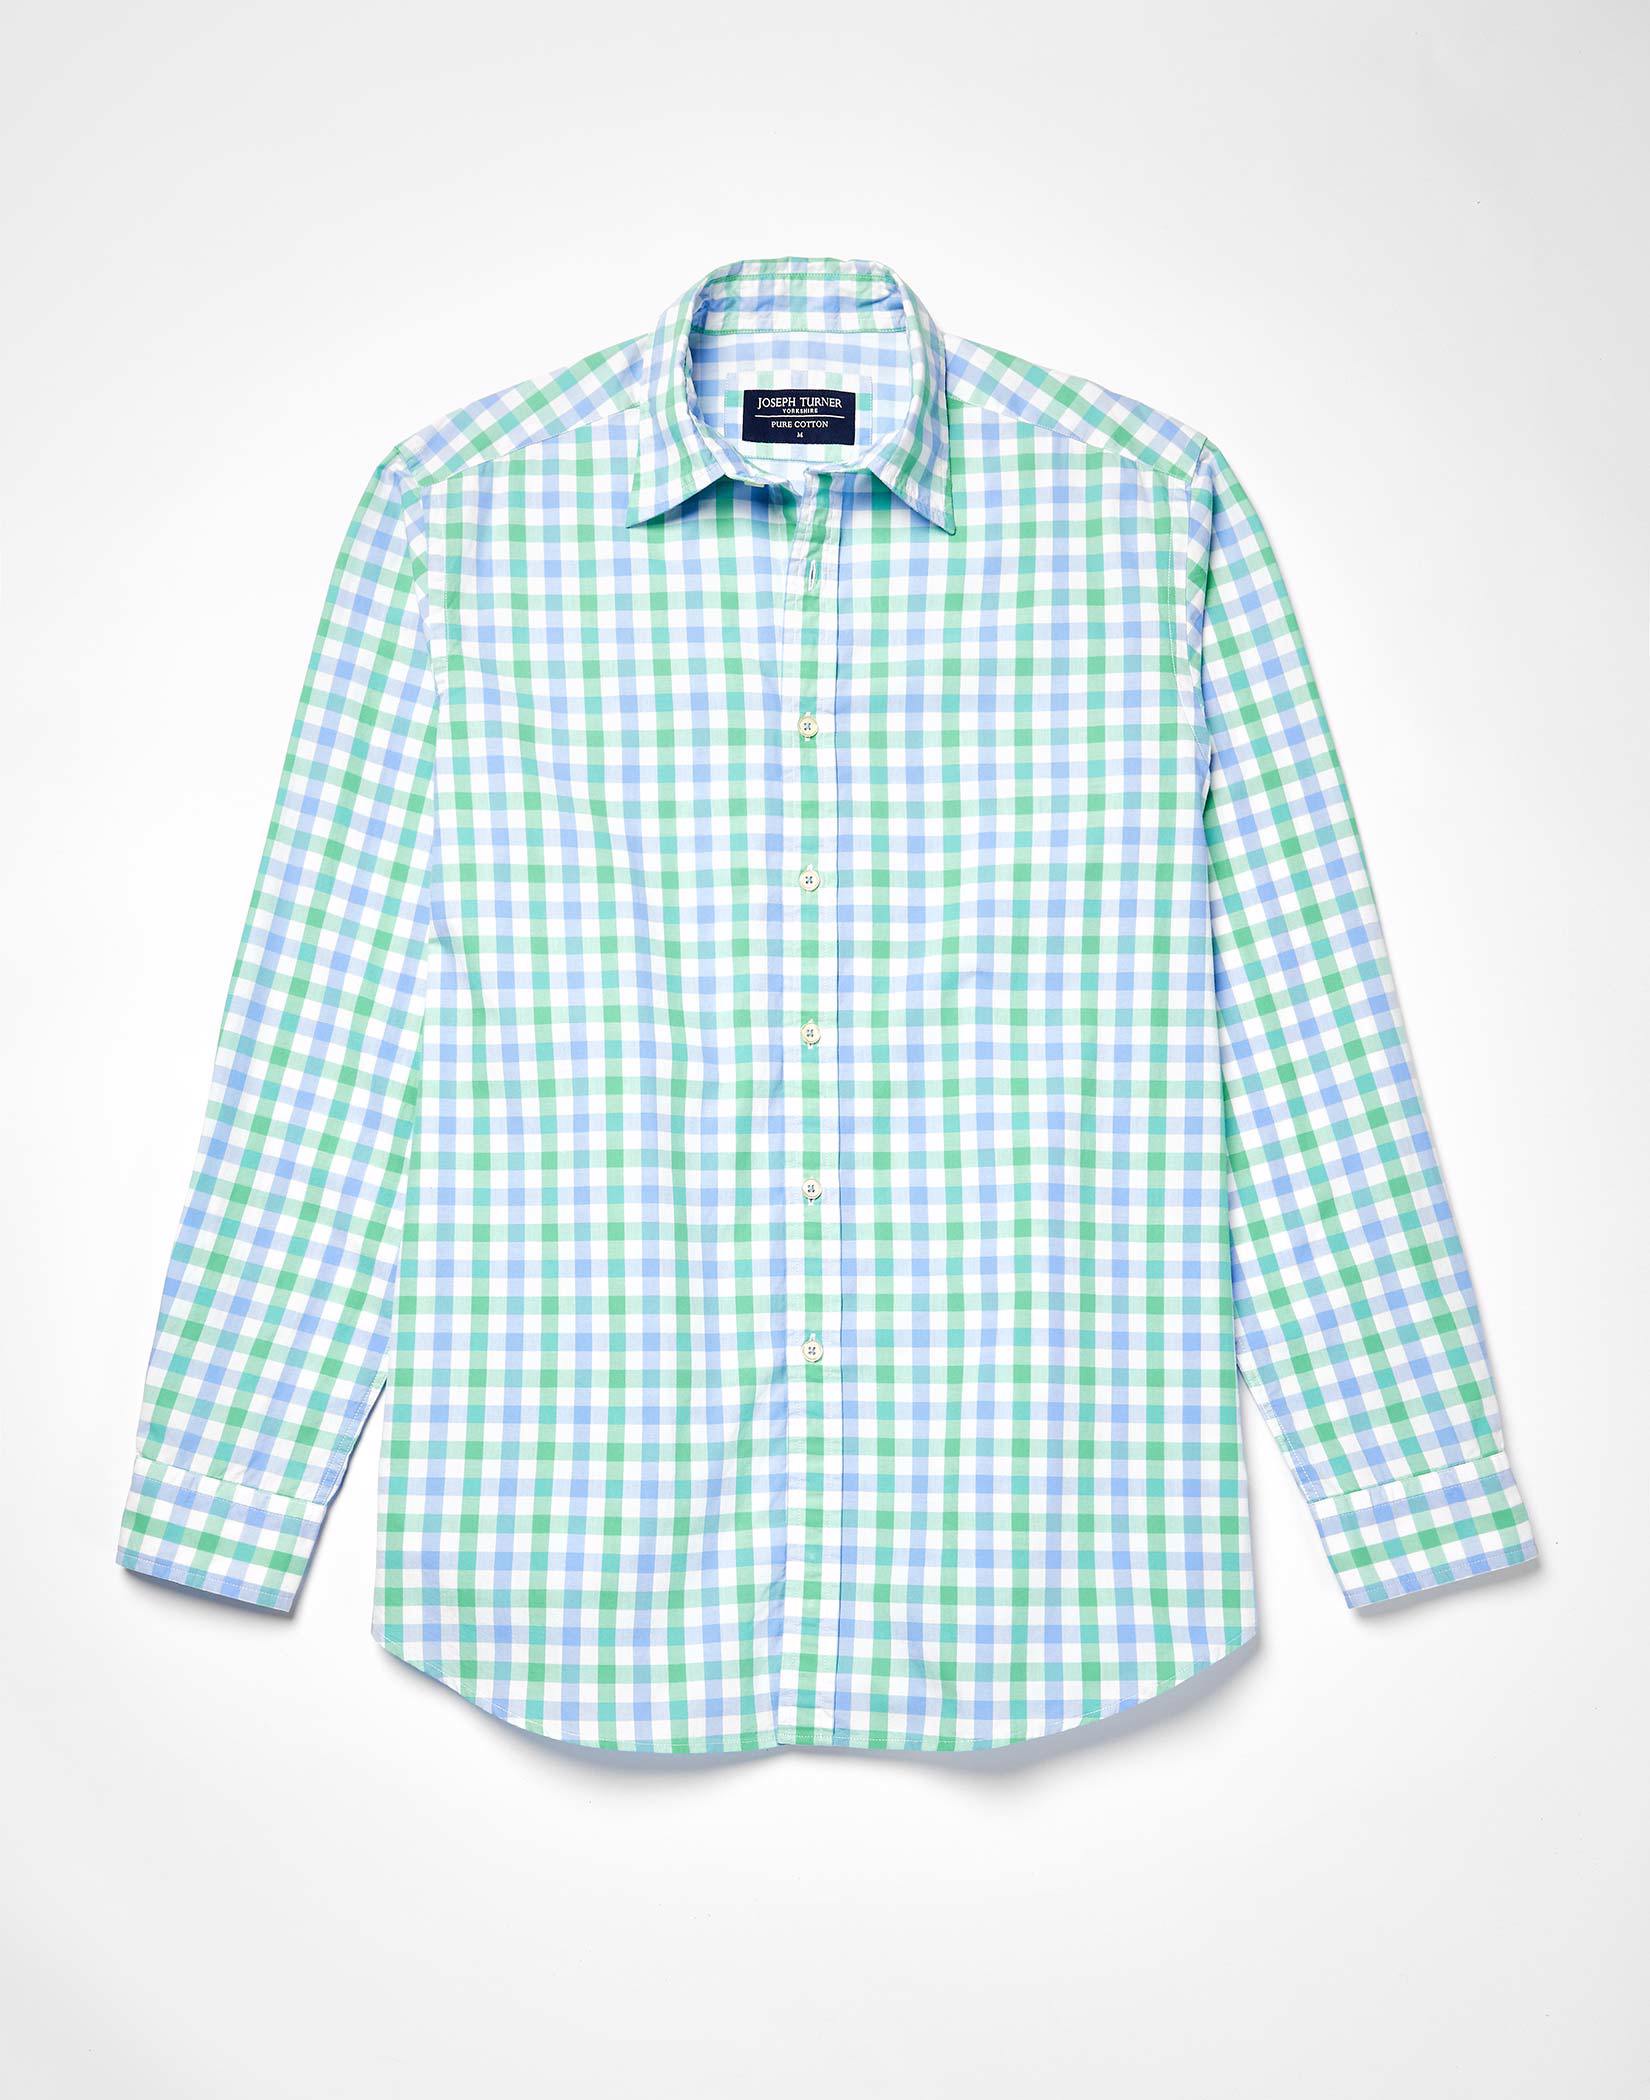 Gingham Check Shirt - Green/Blue